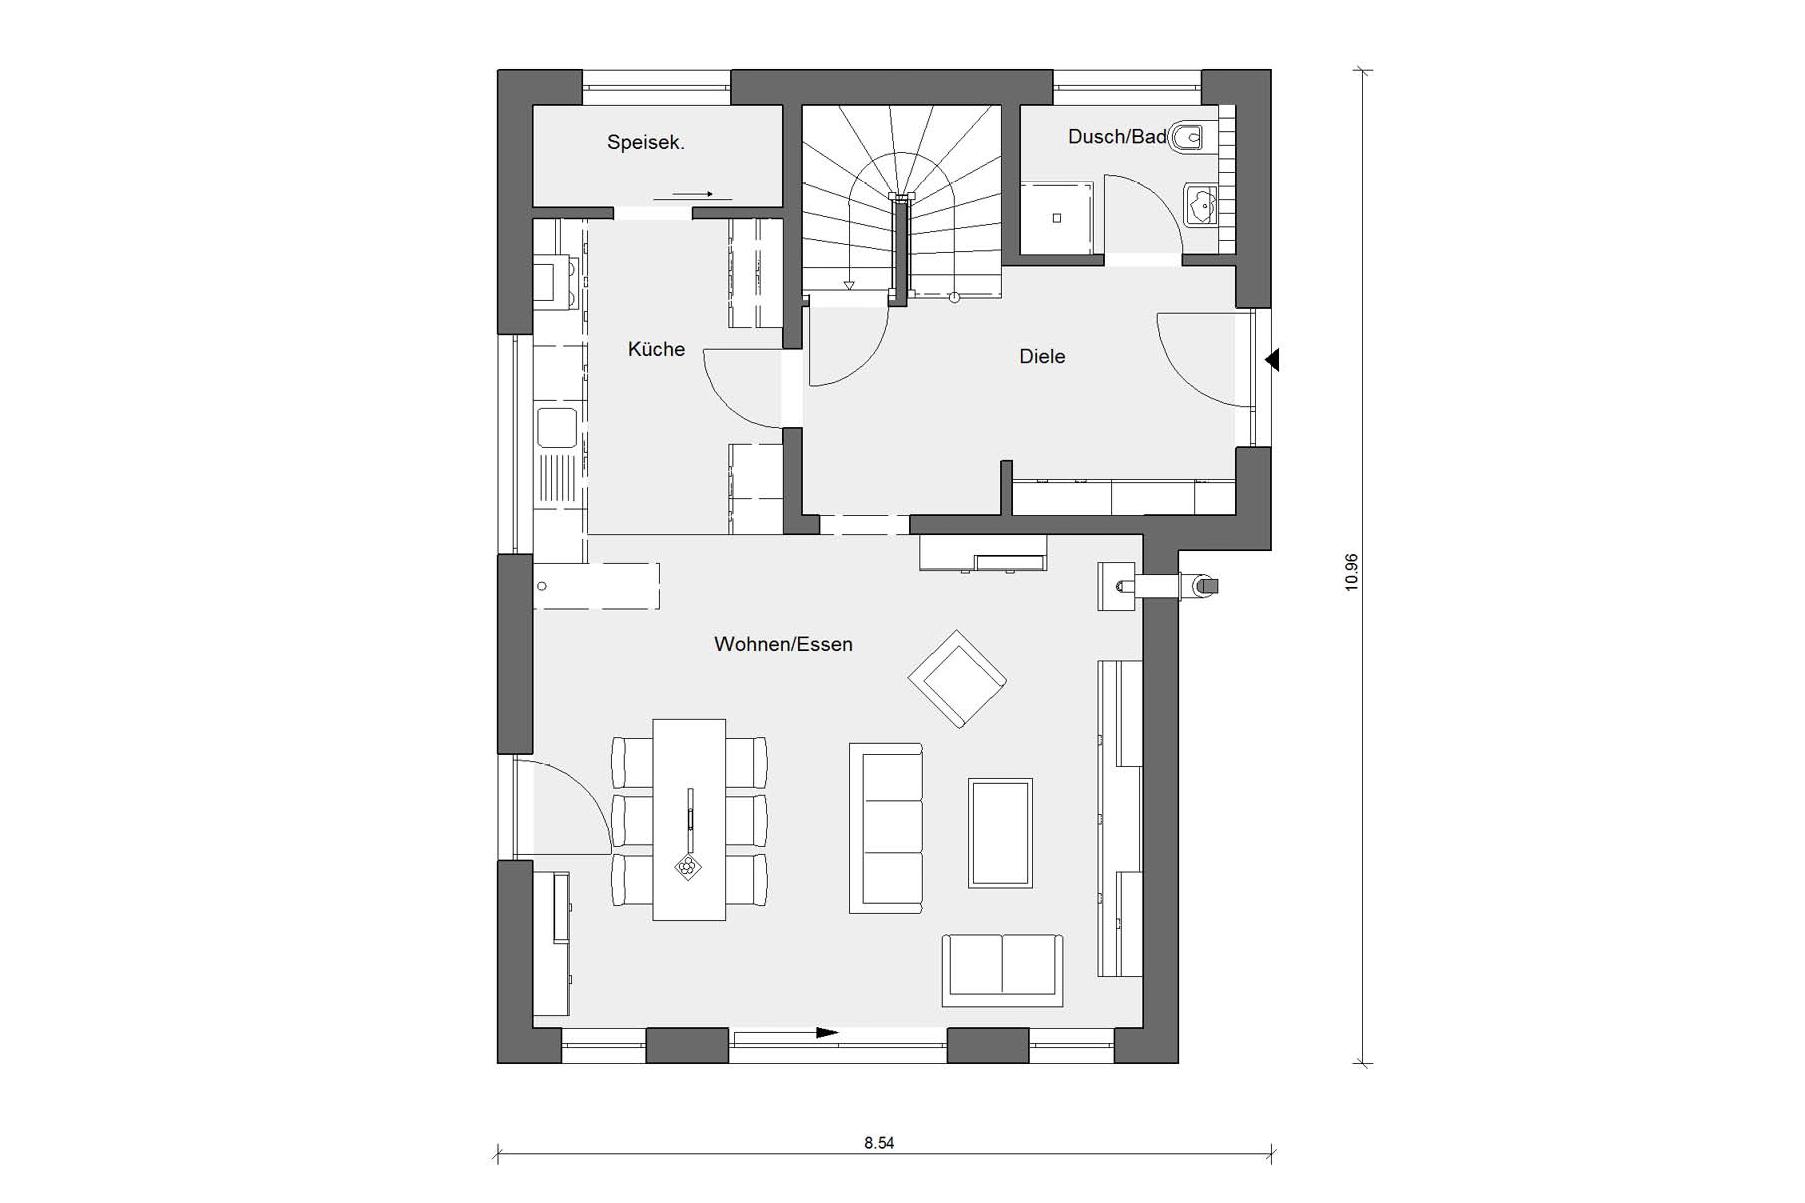 Floor plan ground floor E 15-139.8 plus energy house